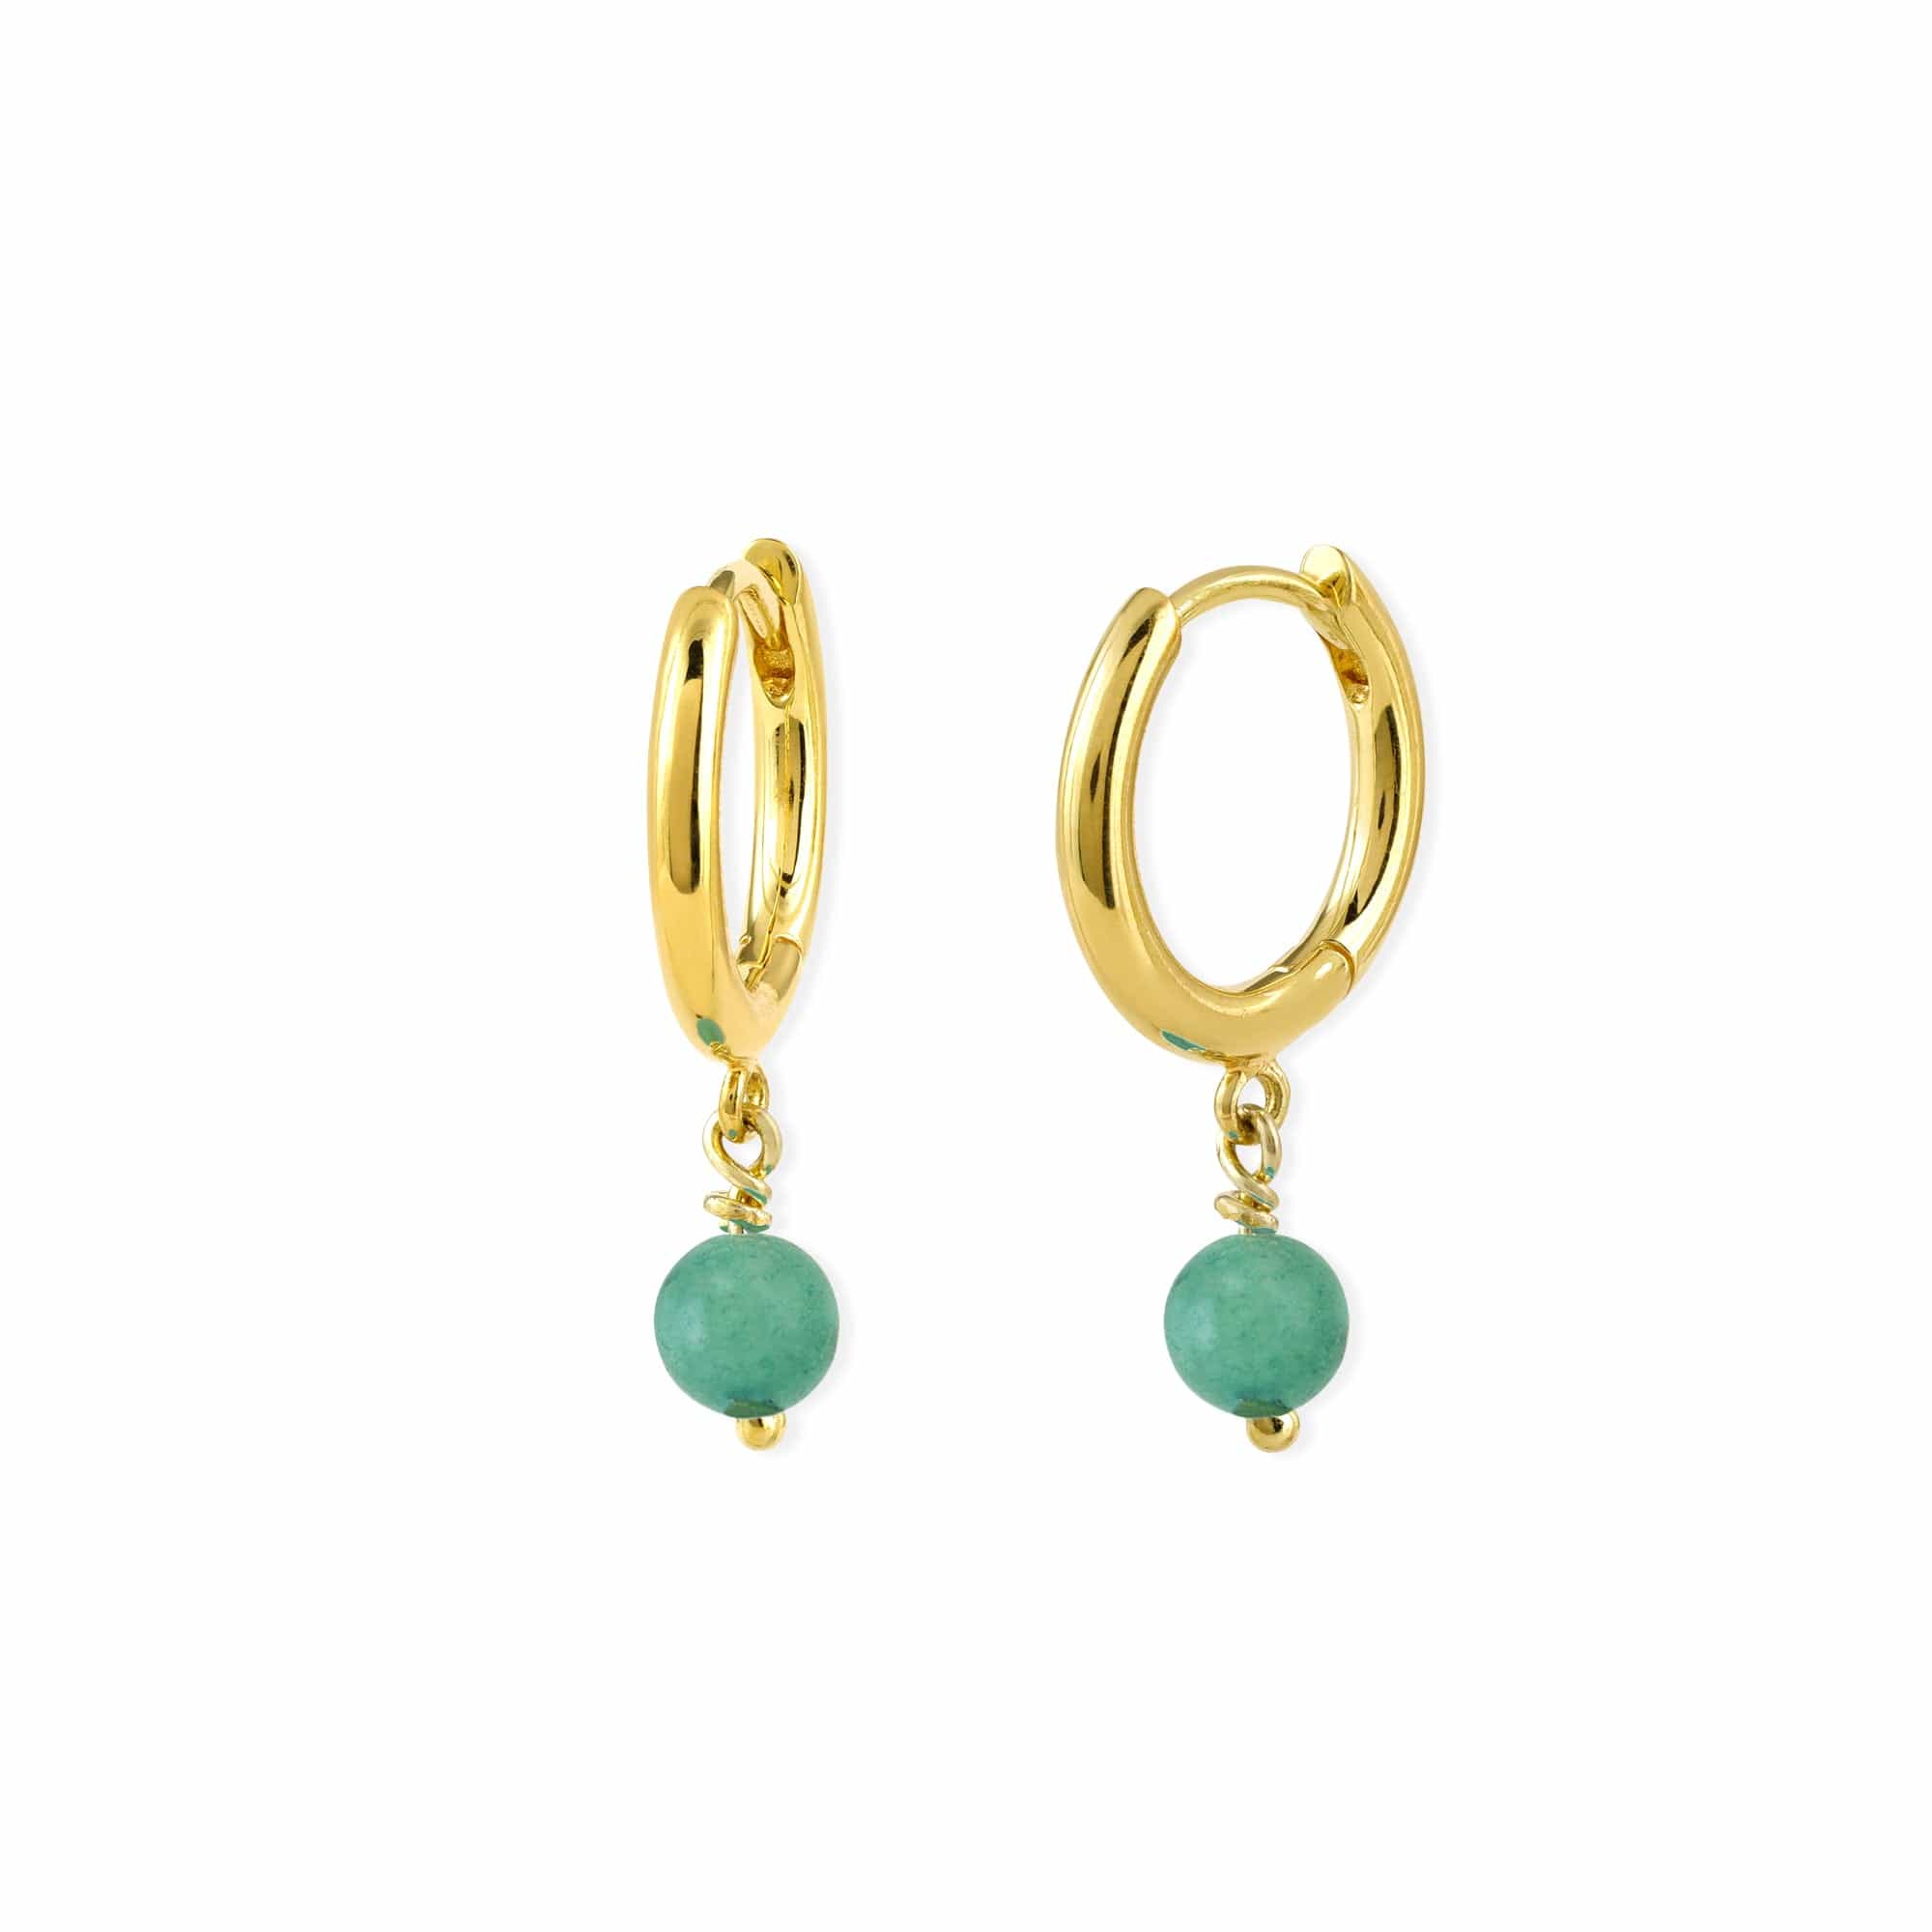 Boma Jewelry Earrings Aventurine / 14K Gold Plated Treasured Drop Huggies